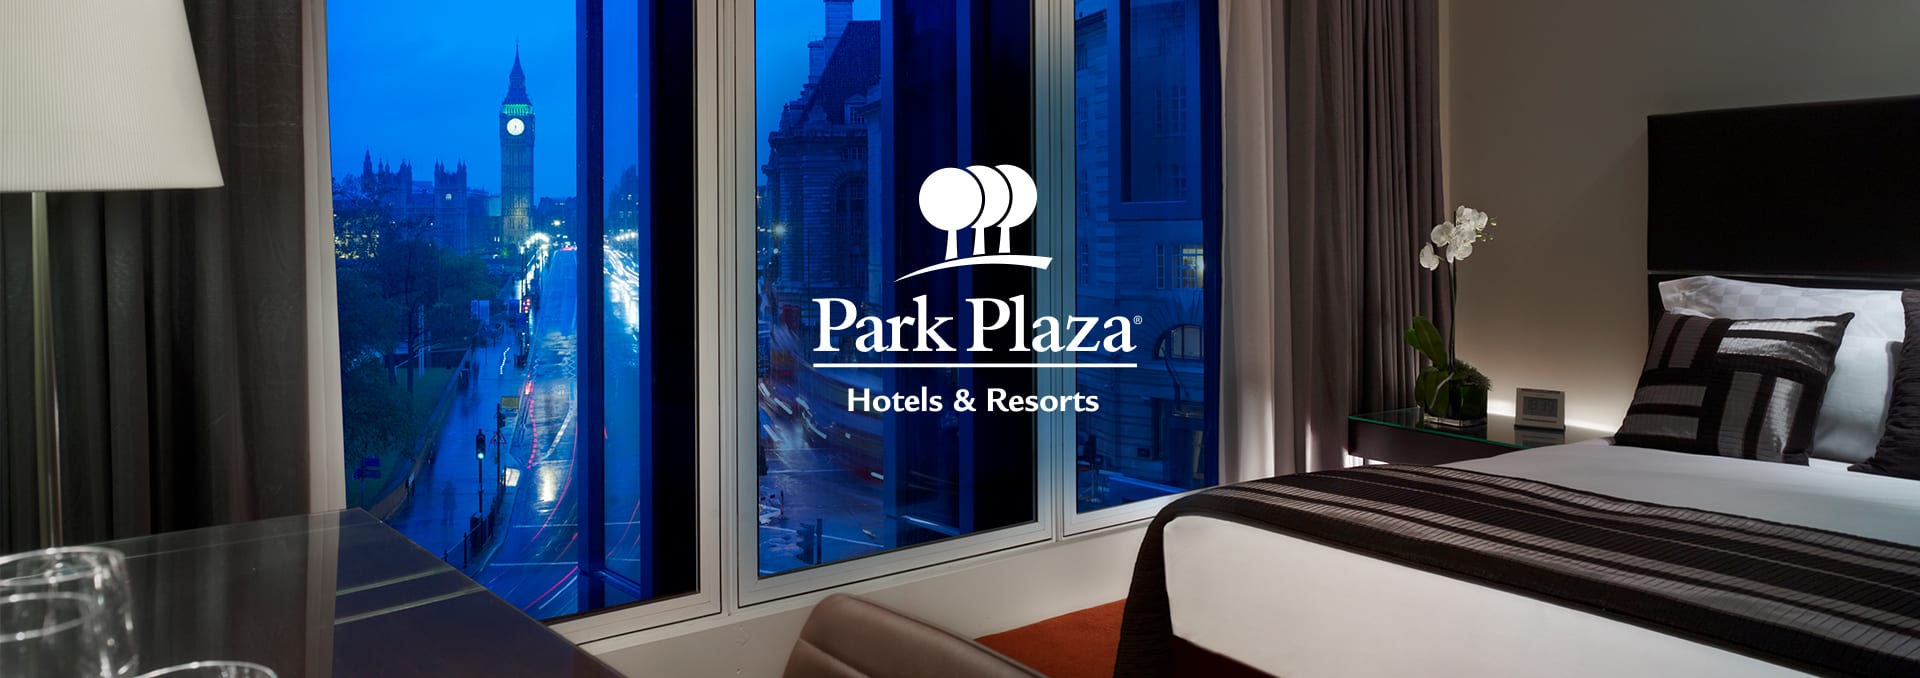 park plaza hotel room